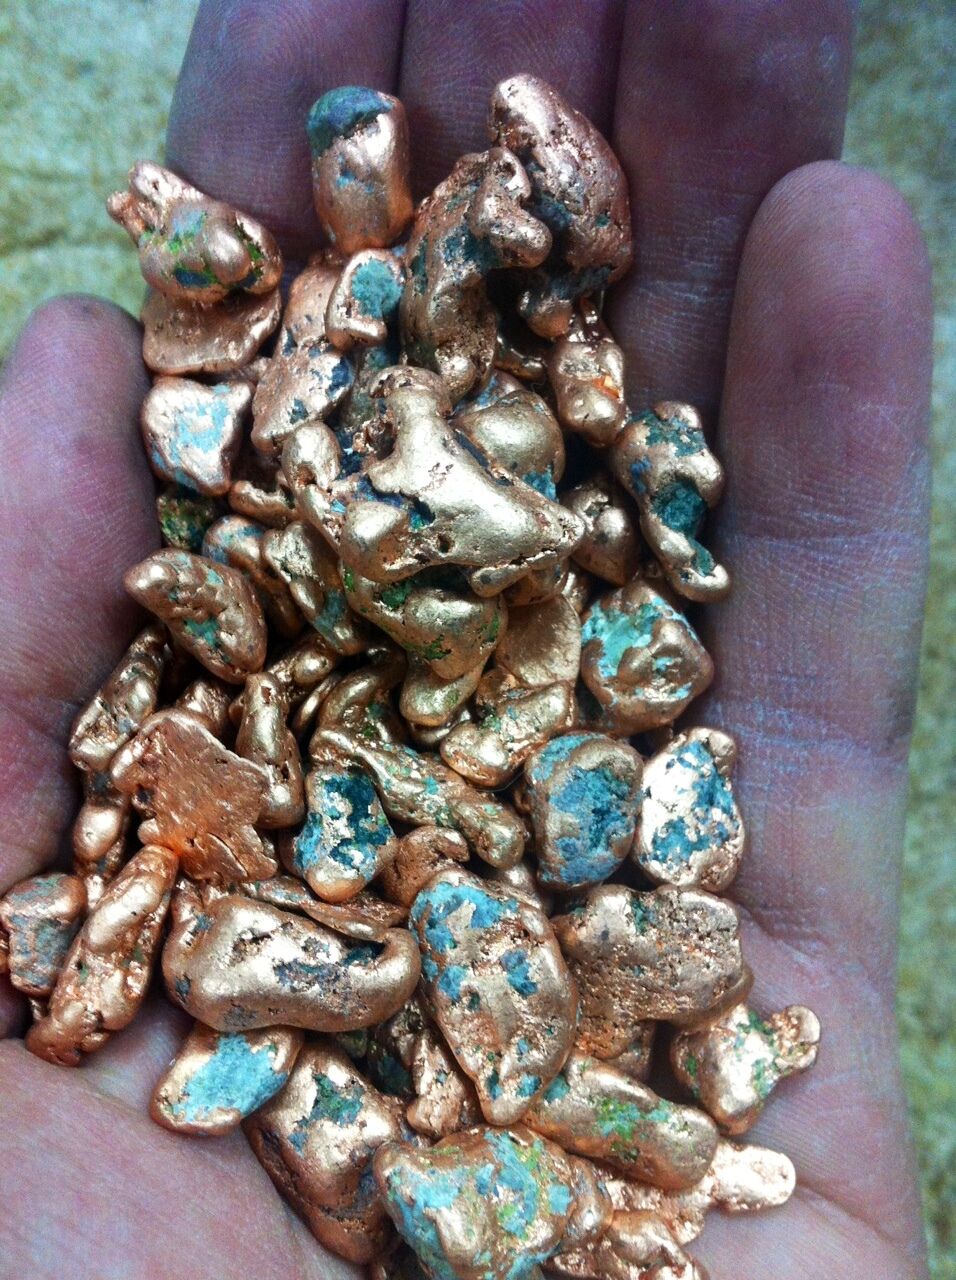 Native Natural Copper Nuggets From Michigan's Keweenaw Peninsula. $14 per Pound.